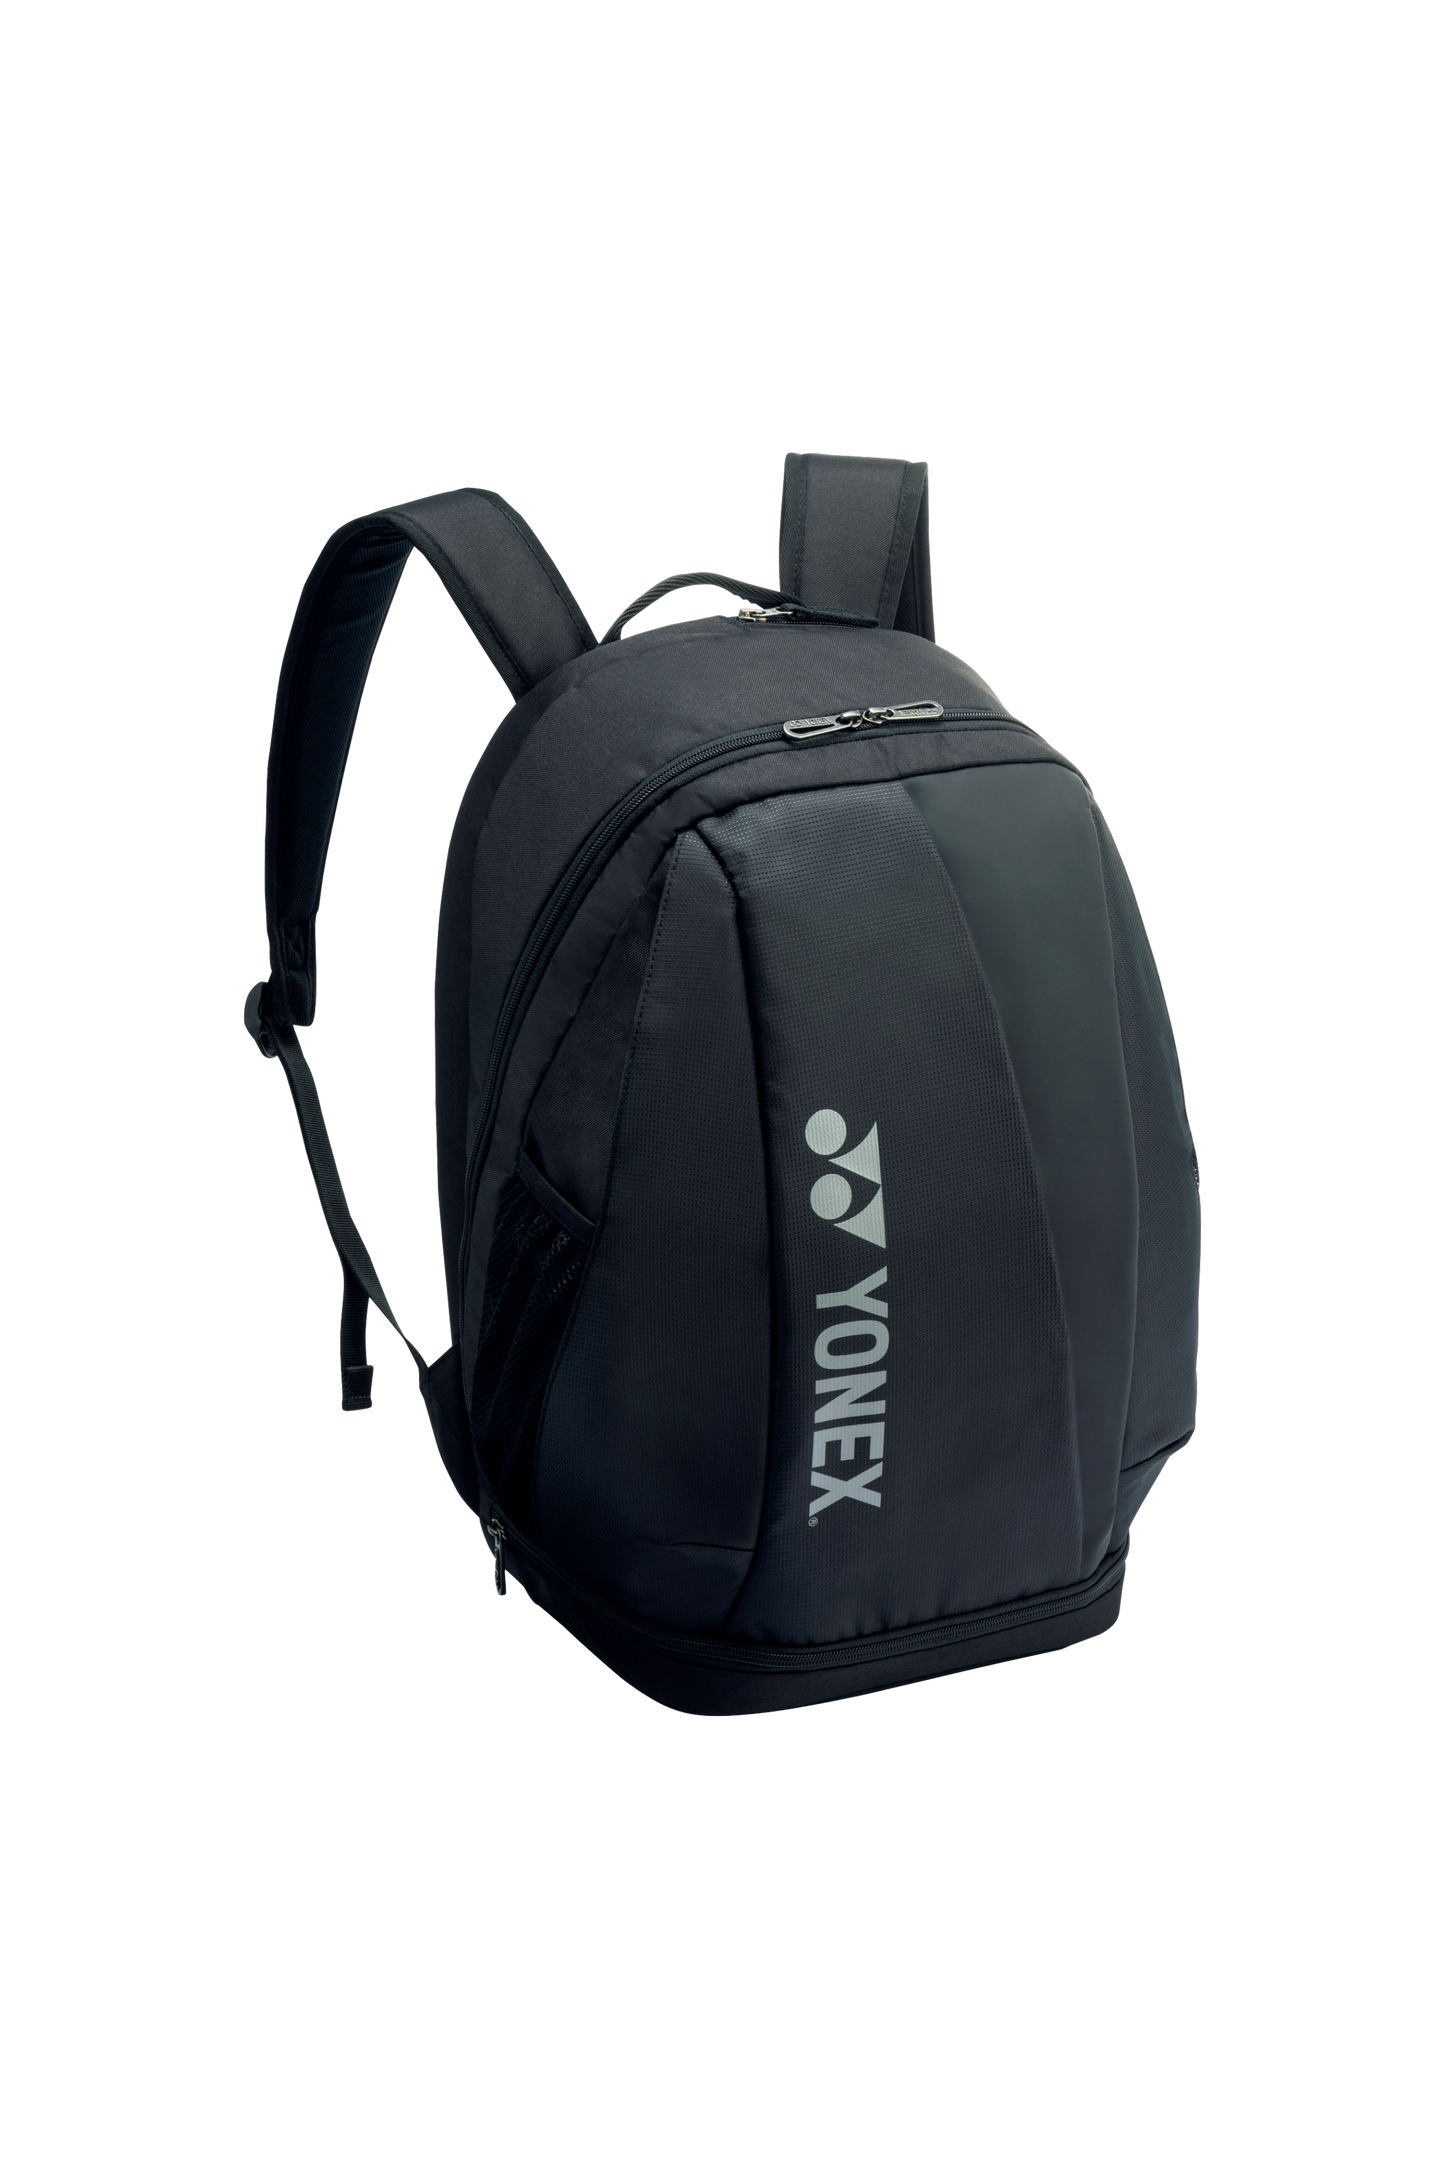 YONEX Pro Backpack 92412M - Max Sports